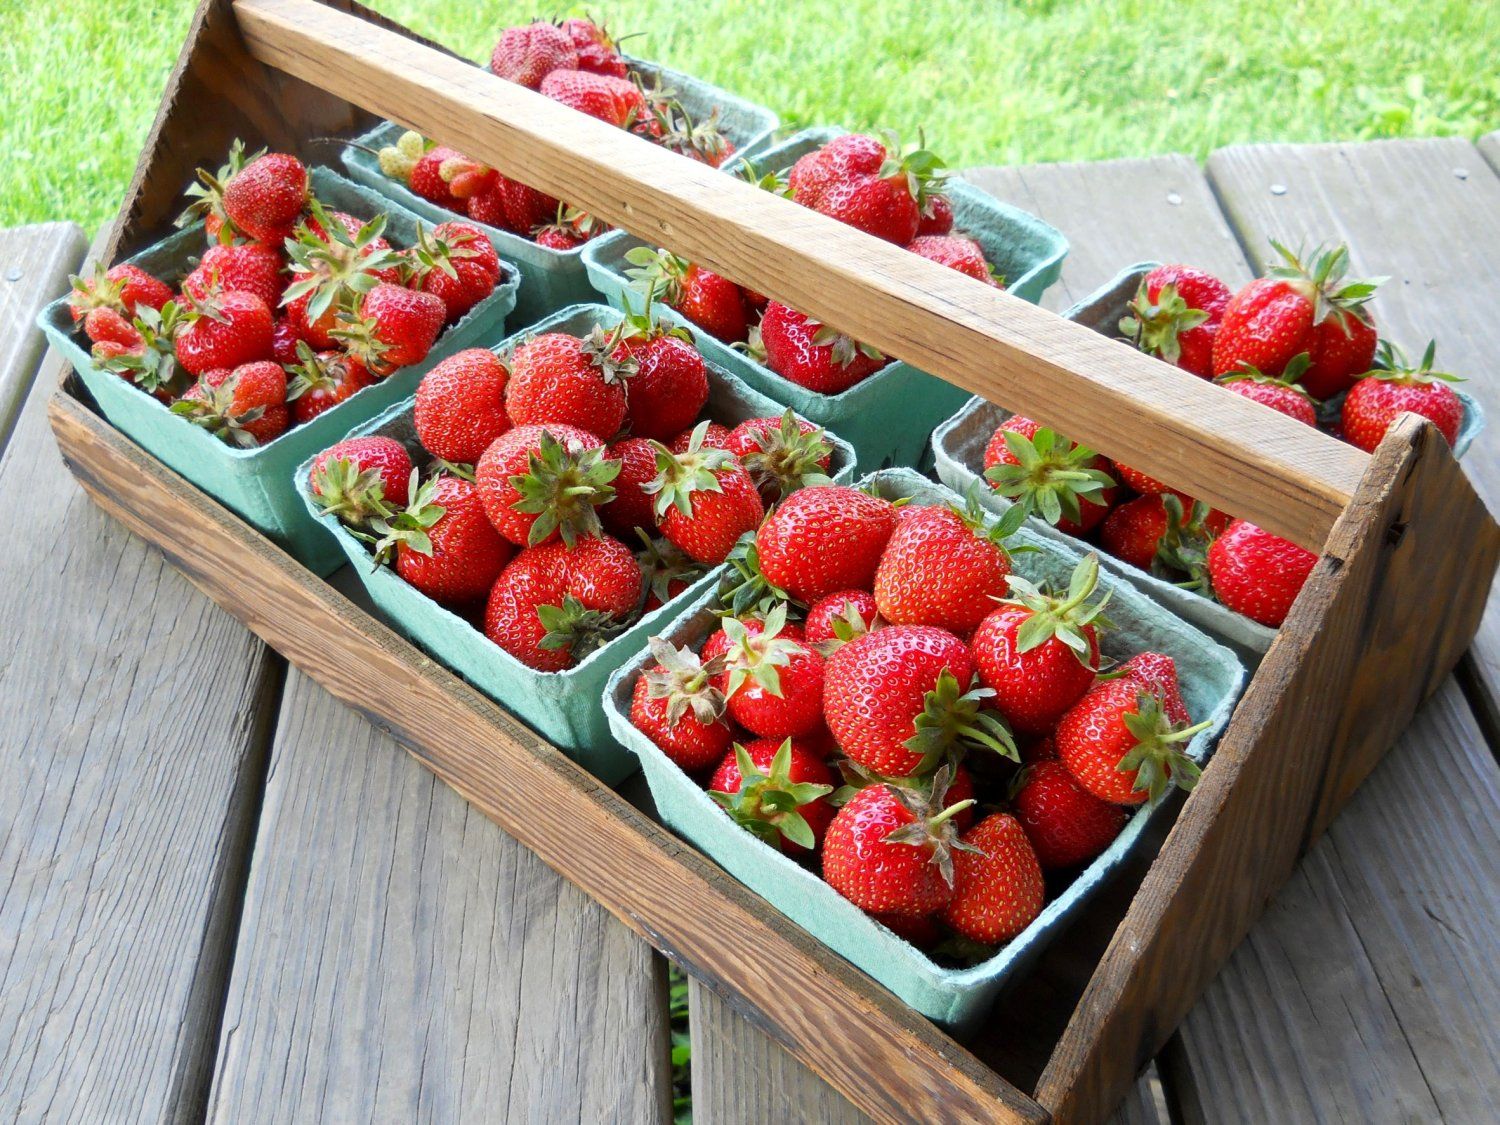 Previous Happening: Start of Strawberry Season